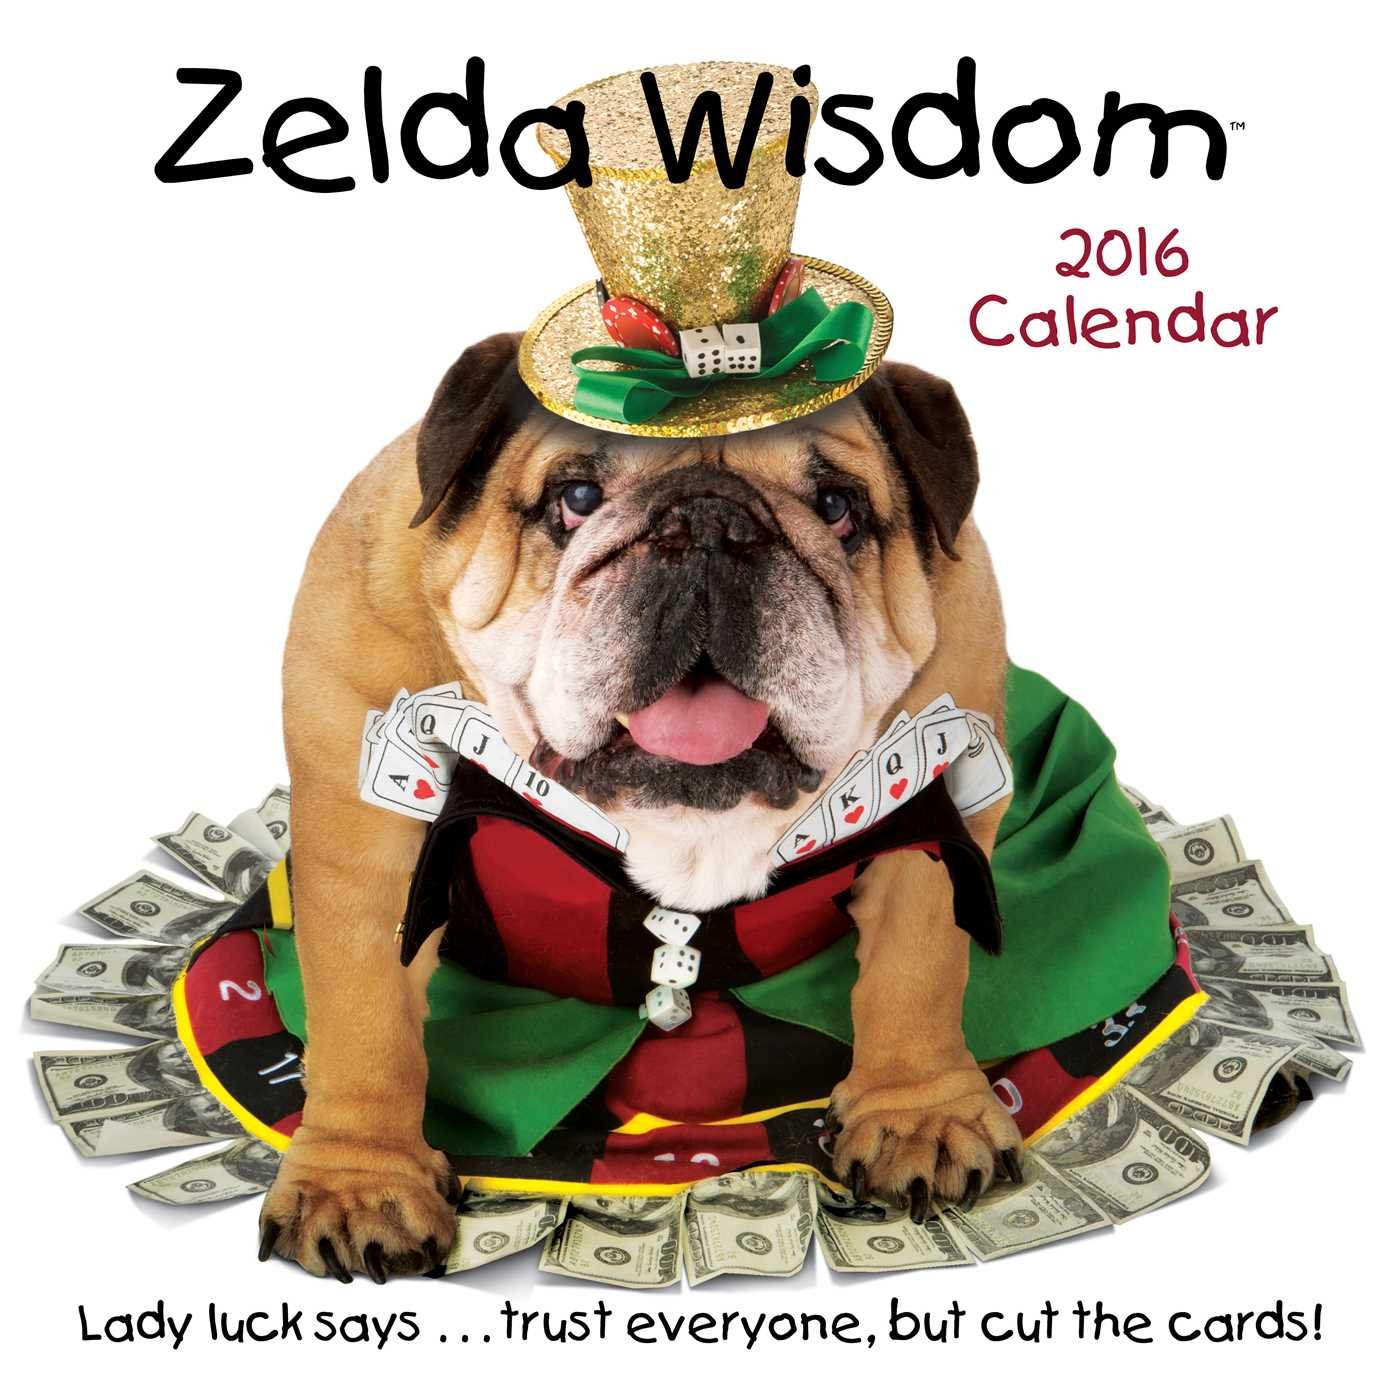 Zelda Wisdom Bulldog Calendar